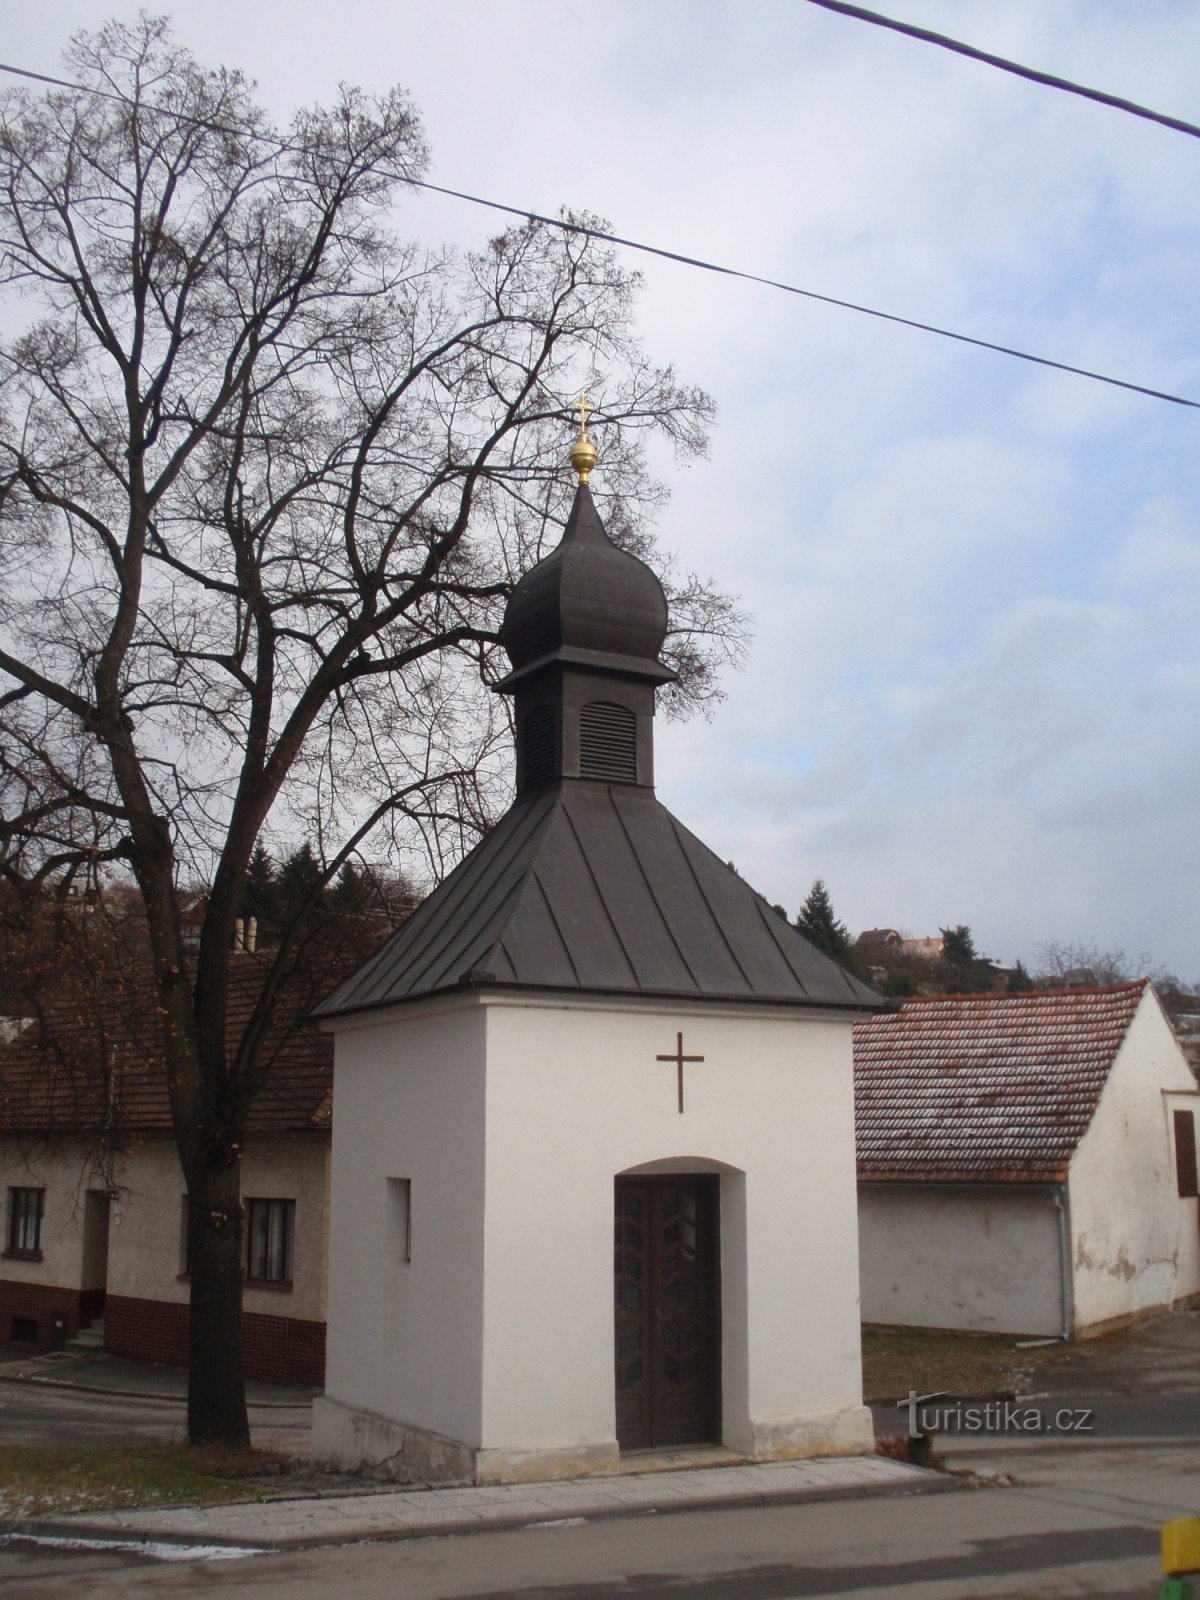 Rozdrojovice - small monuments